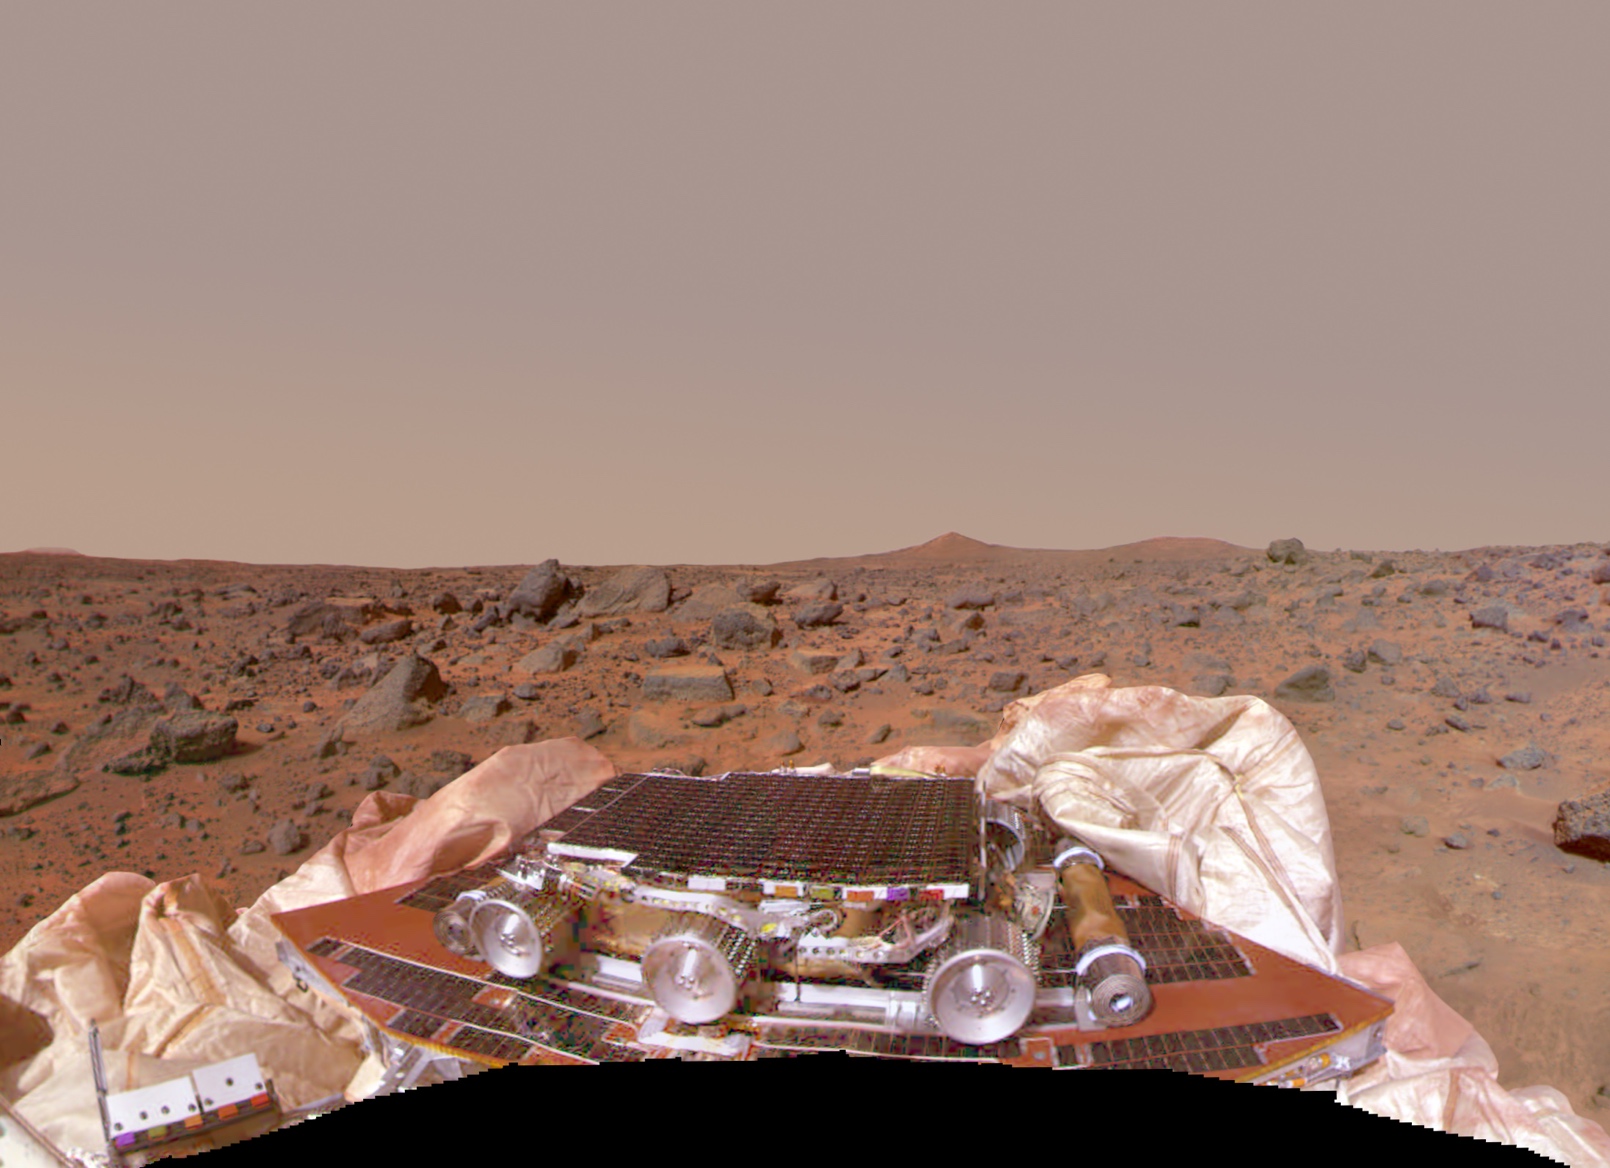 Mars Pathfinder shortly after landing on Mars.